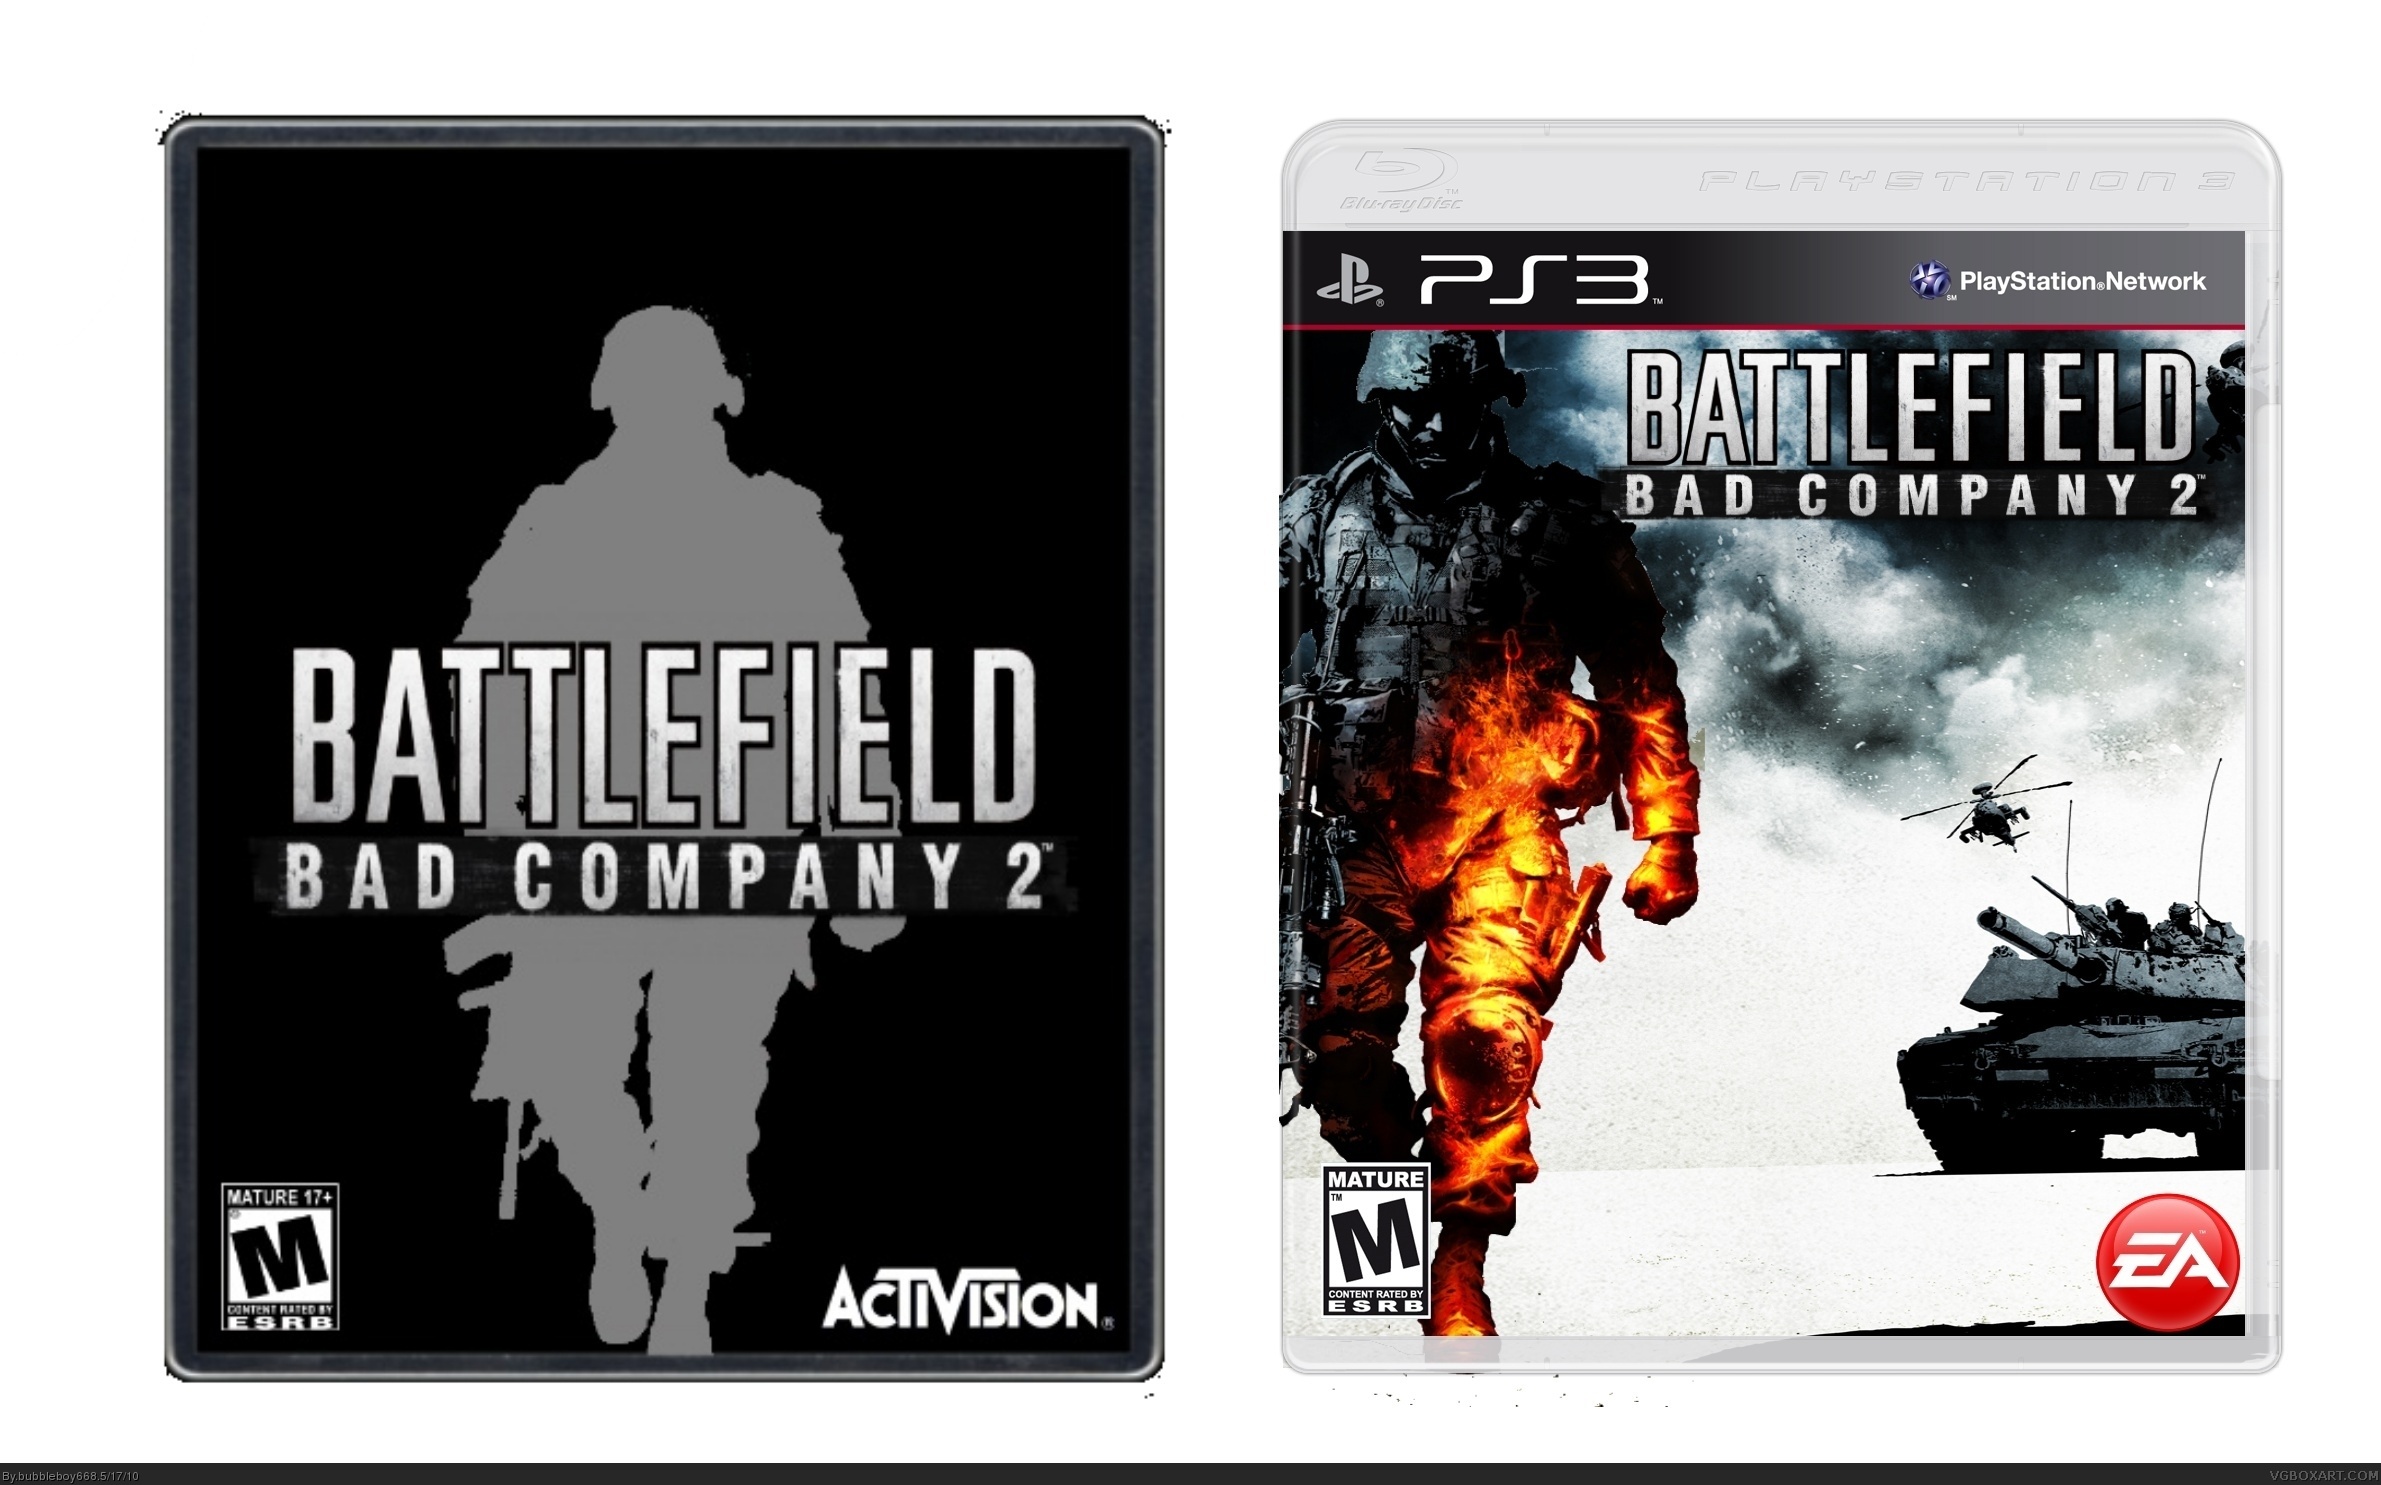 Battlefield Bad Company 2: Special Edition box cover